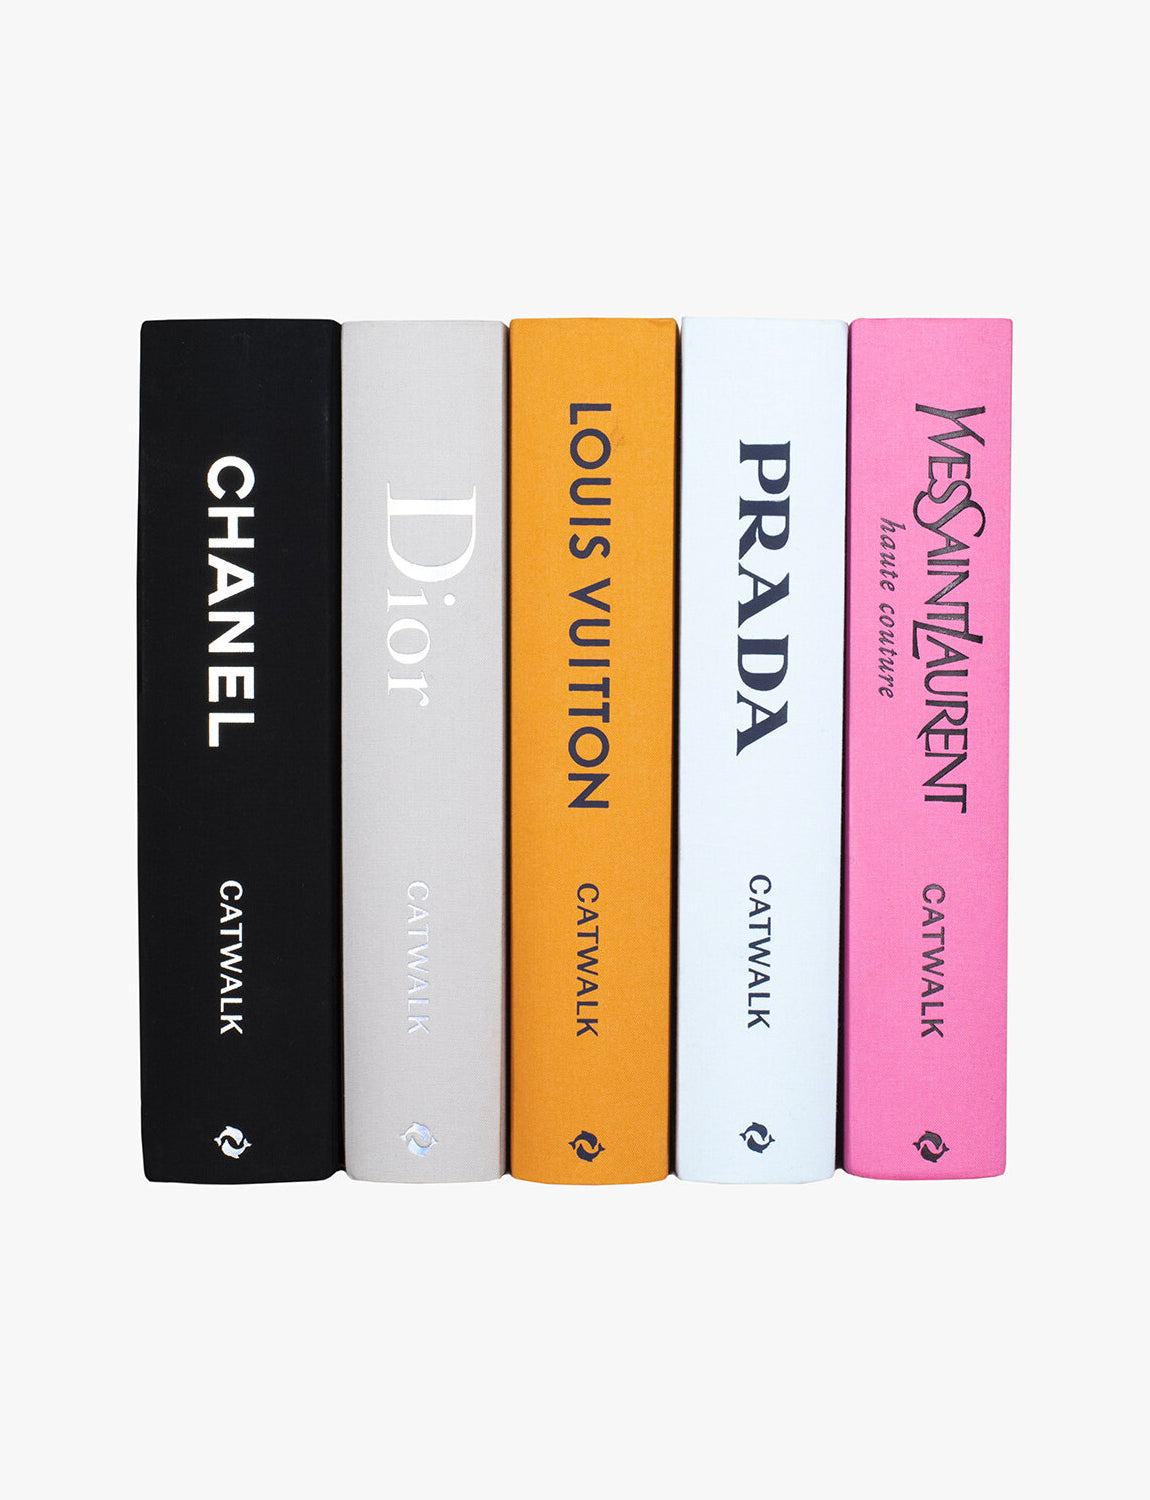 10 BOOKS Color Designer Book Set, Chanel, Tom Ford, Louis Vuitton